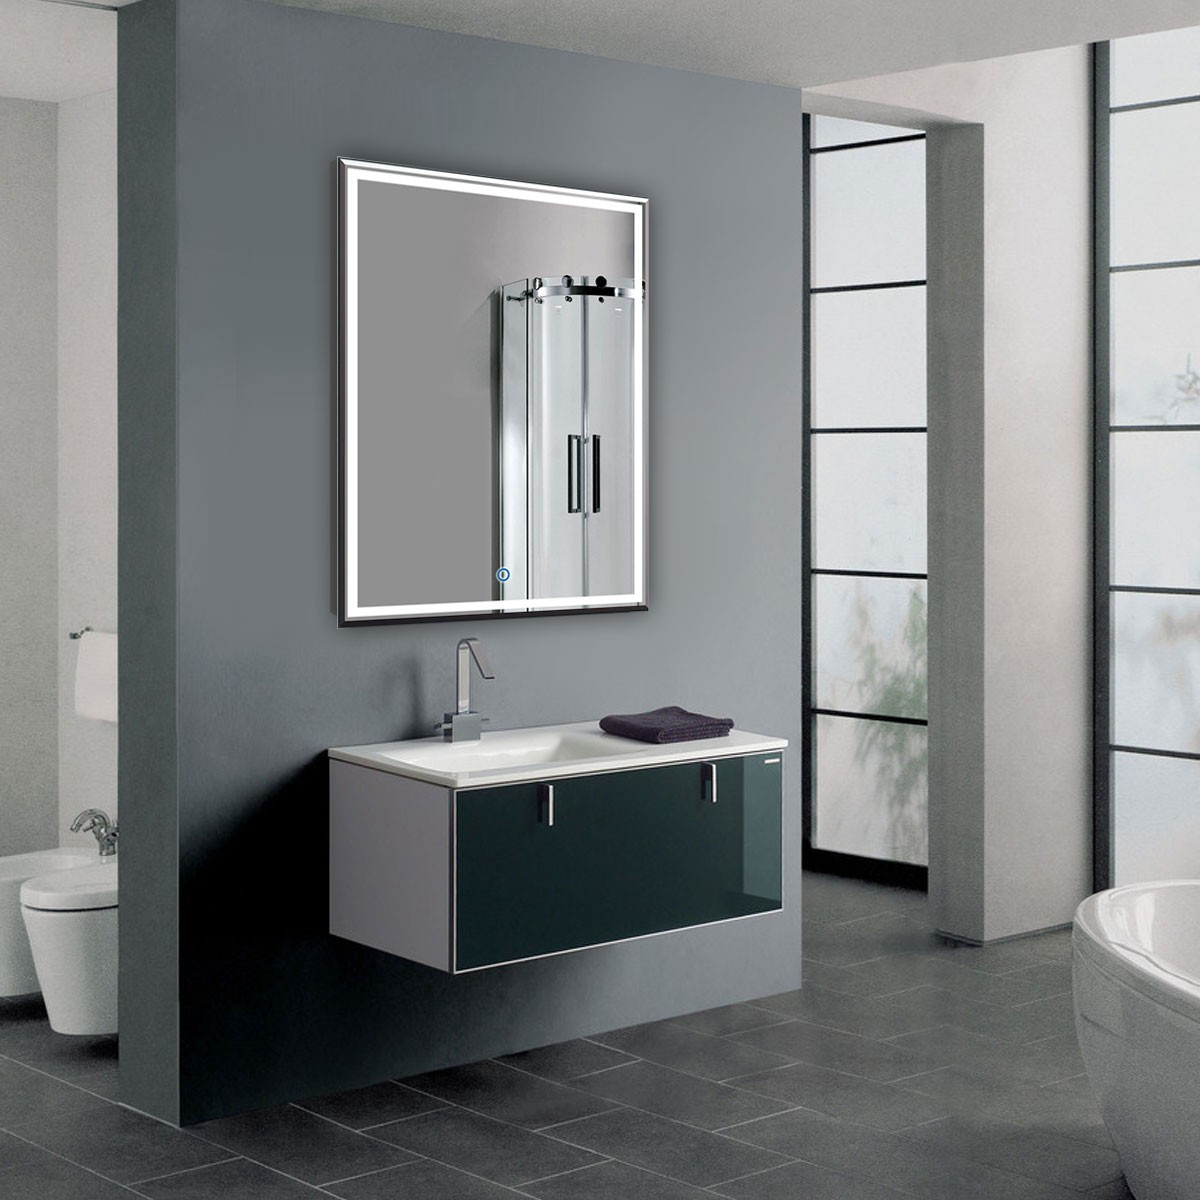 36 X 36 Bathroom Mirror
 28 x 36 In Vertical LED Bathroom Silvered Mirror with